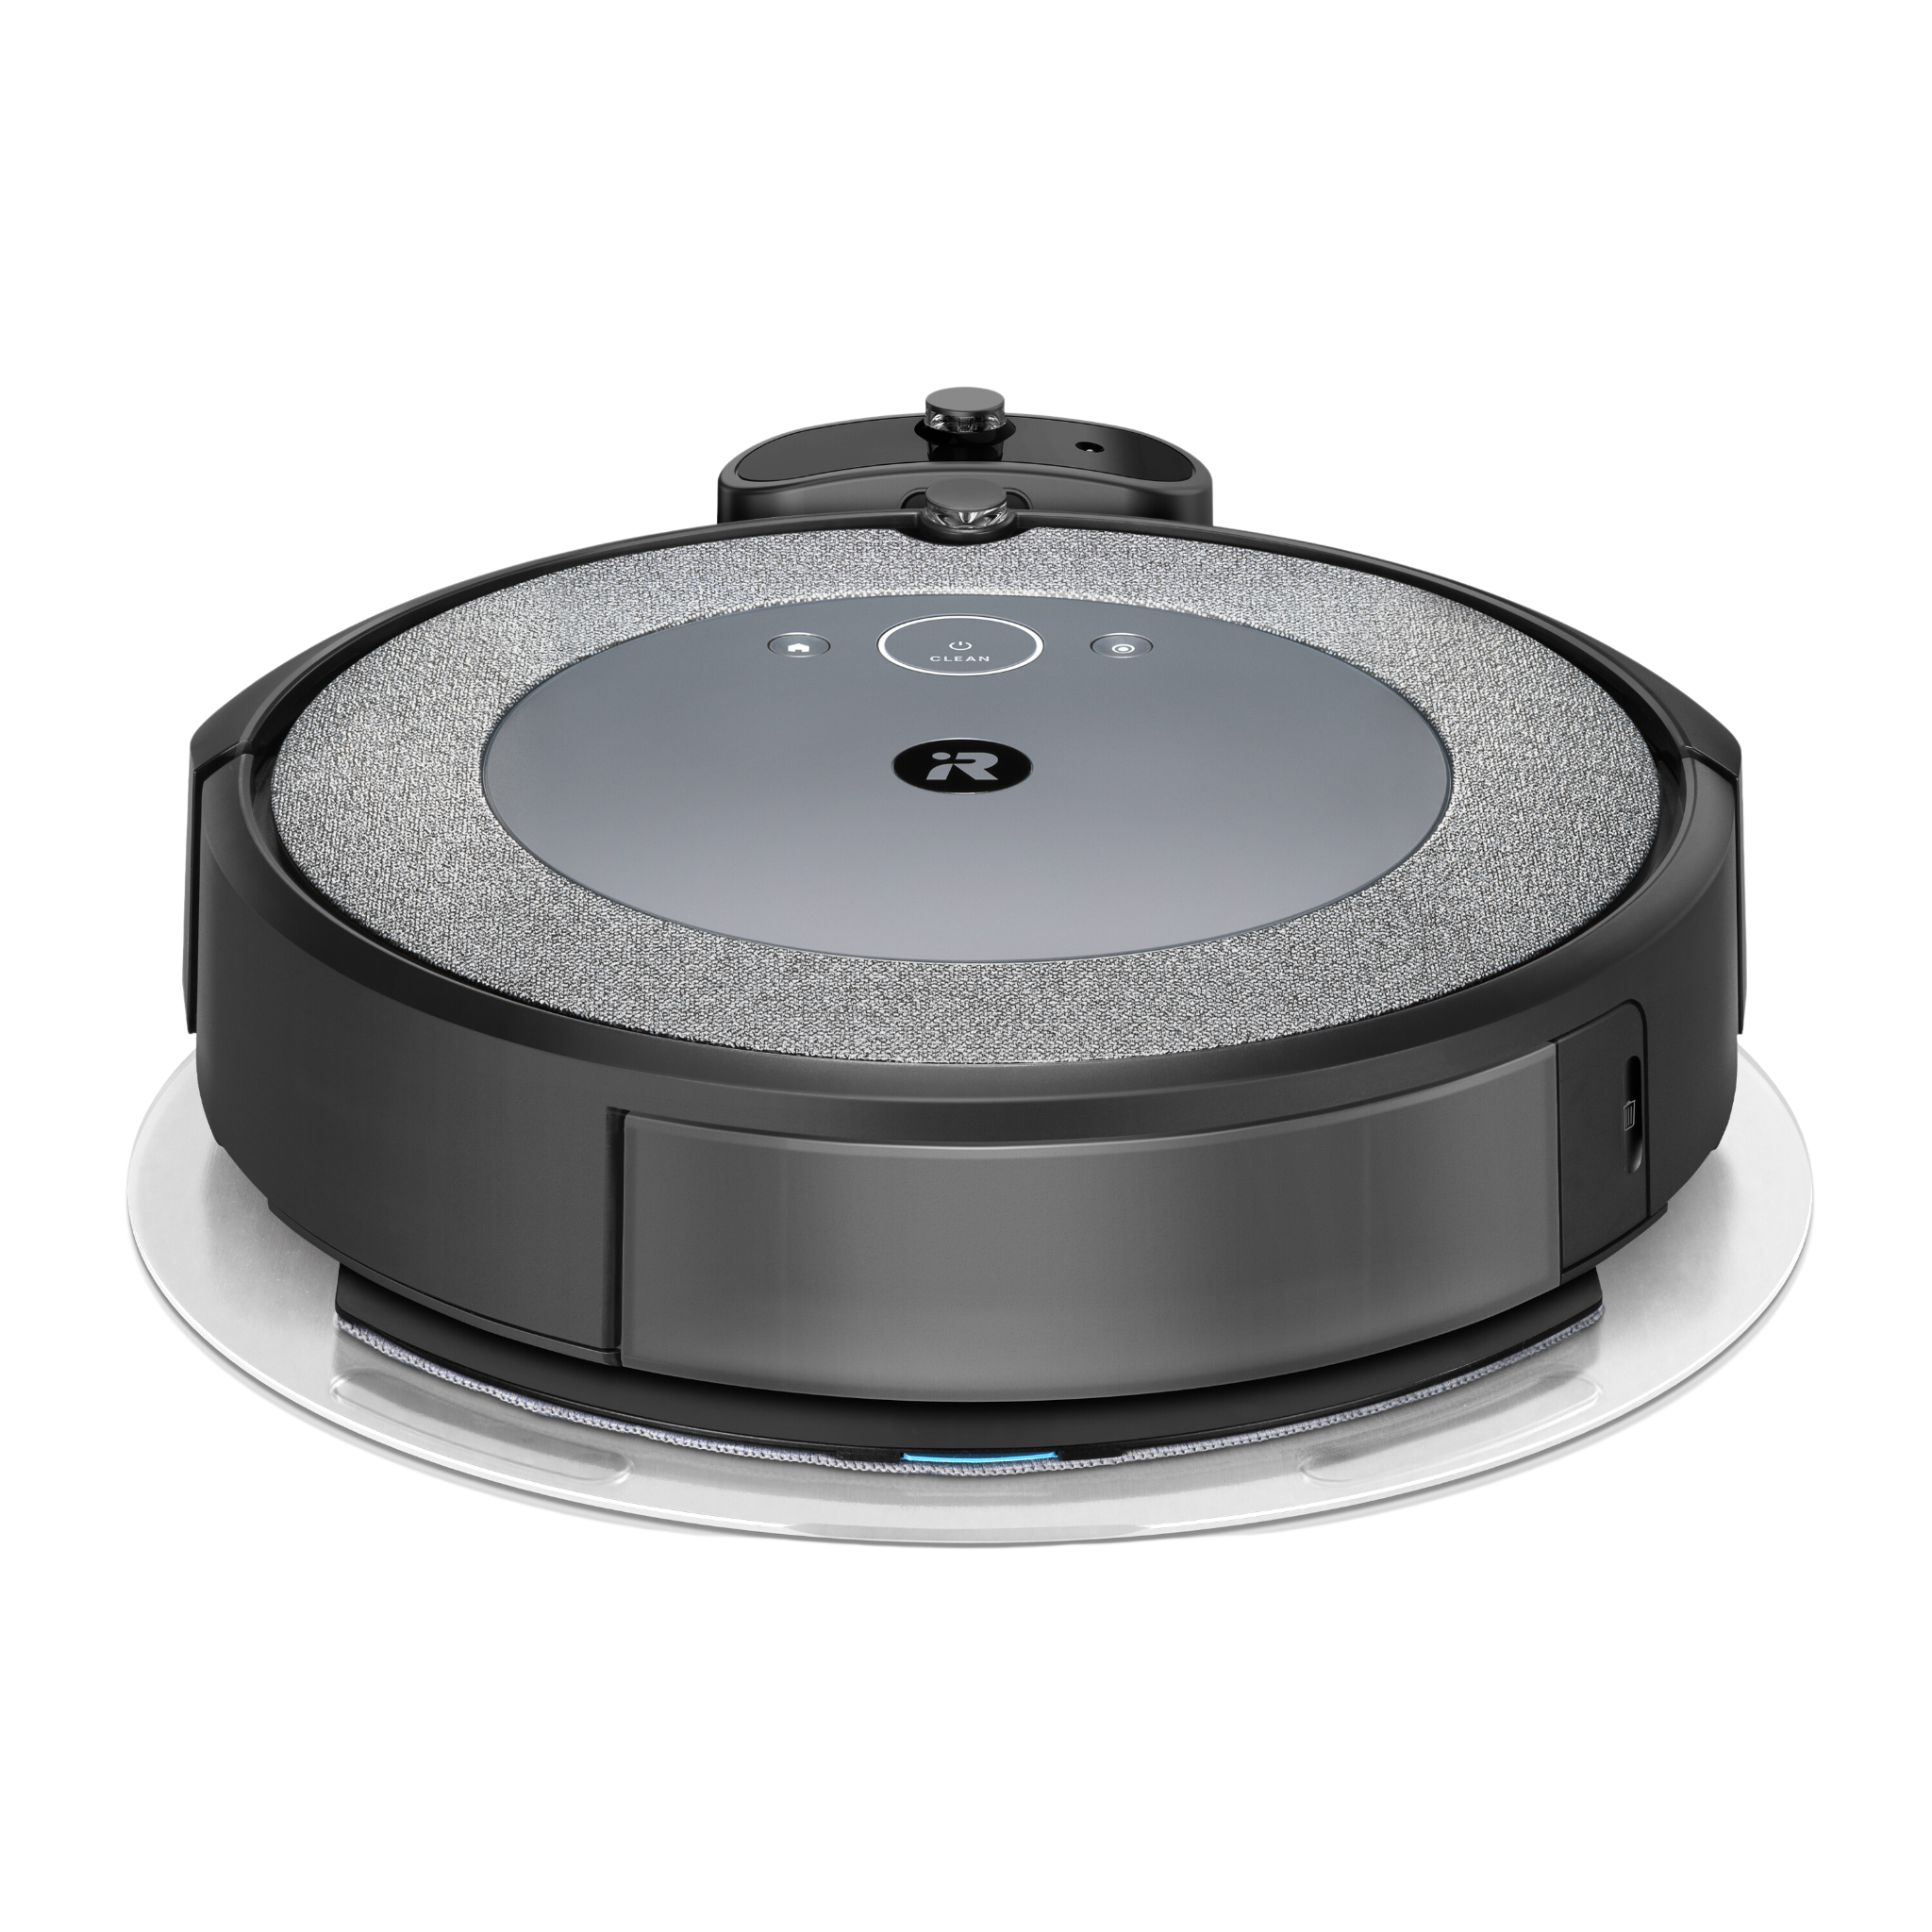 Robot aspirador y friegasuelos Roomba Combo® i5, iRobot®